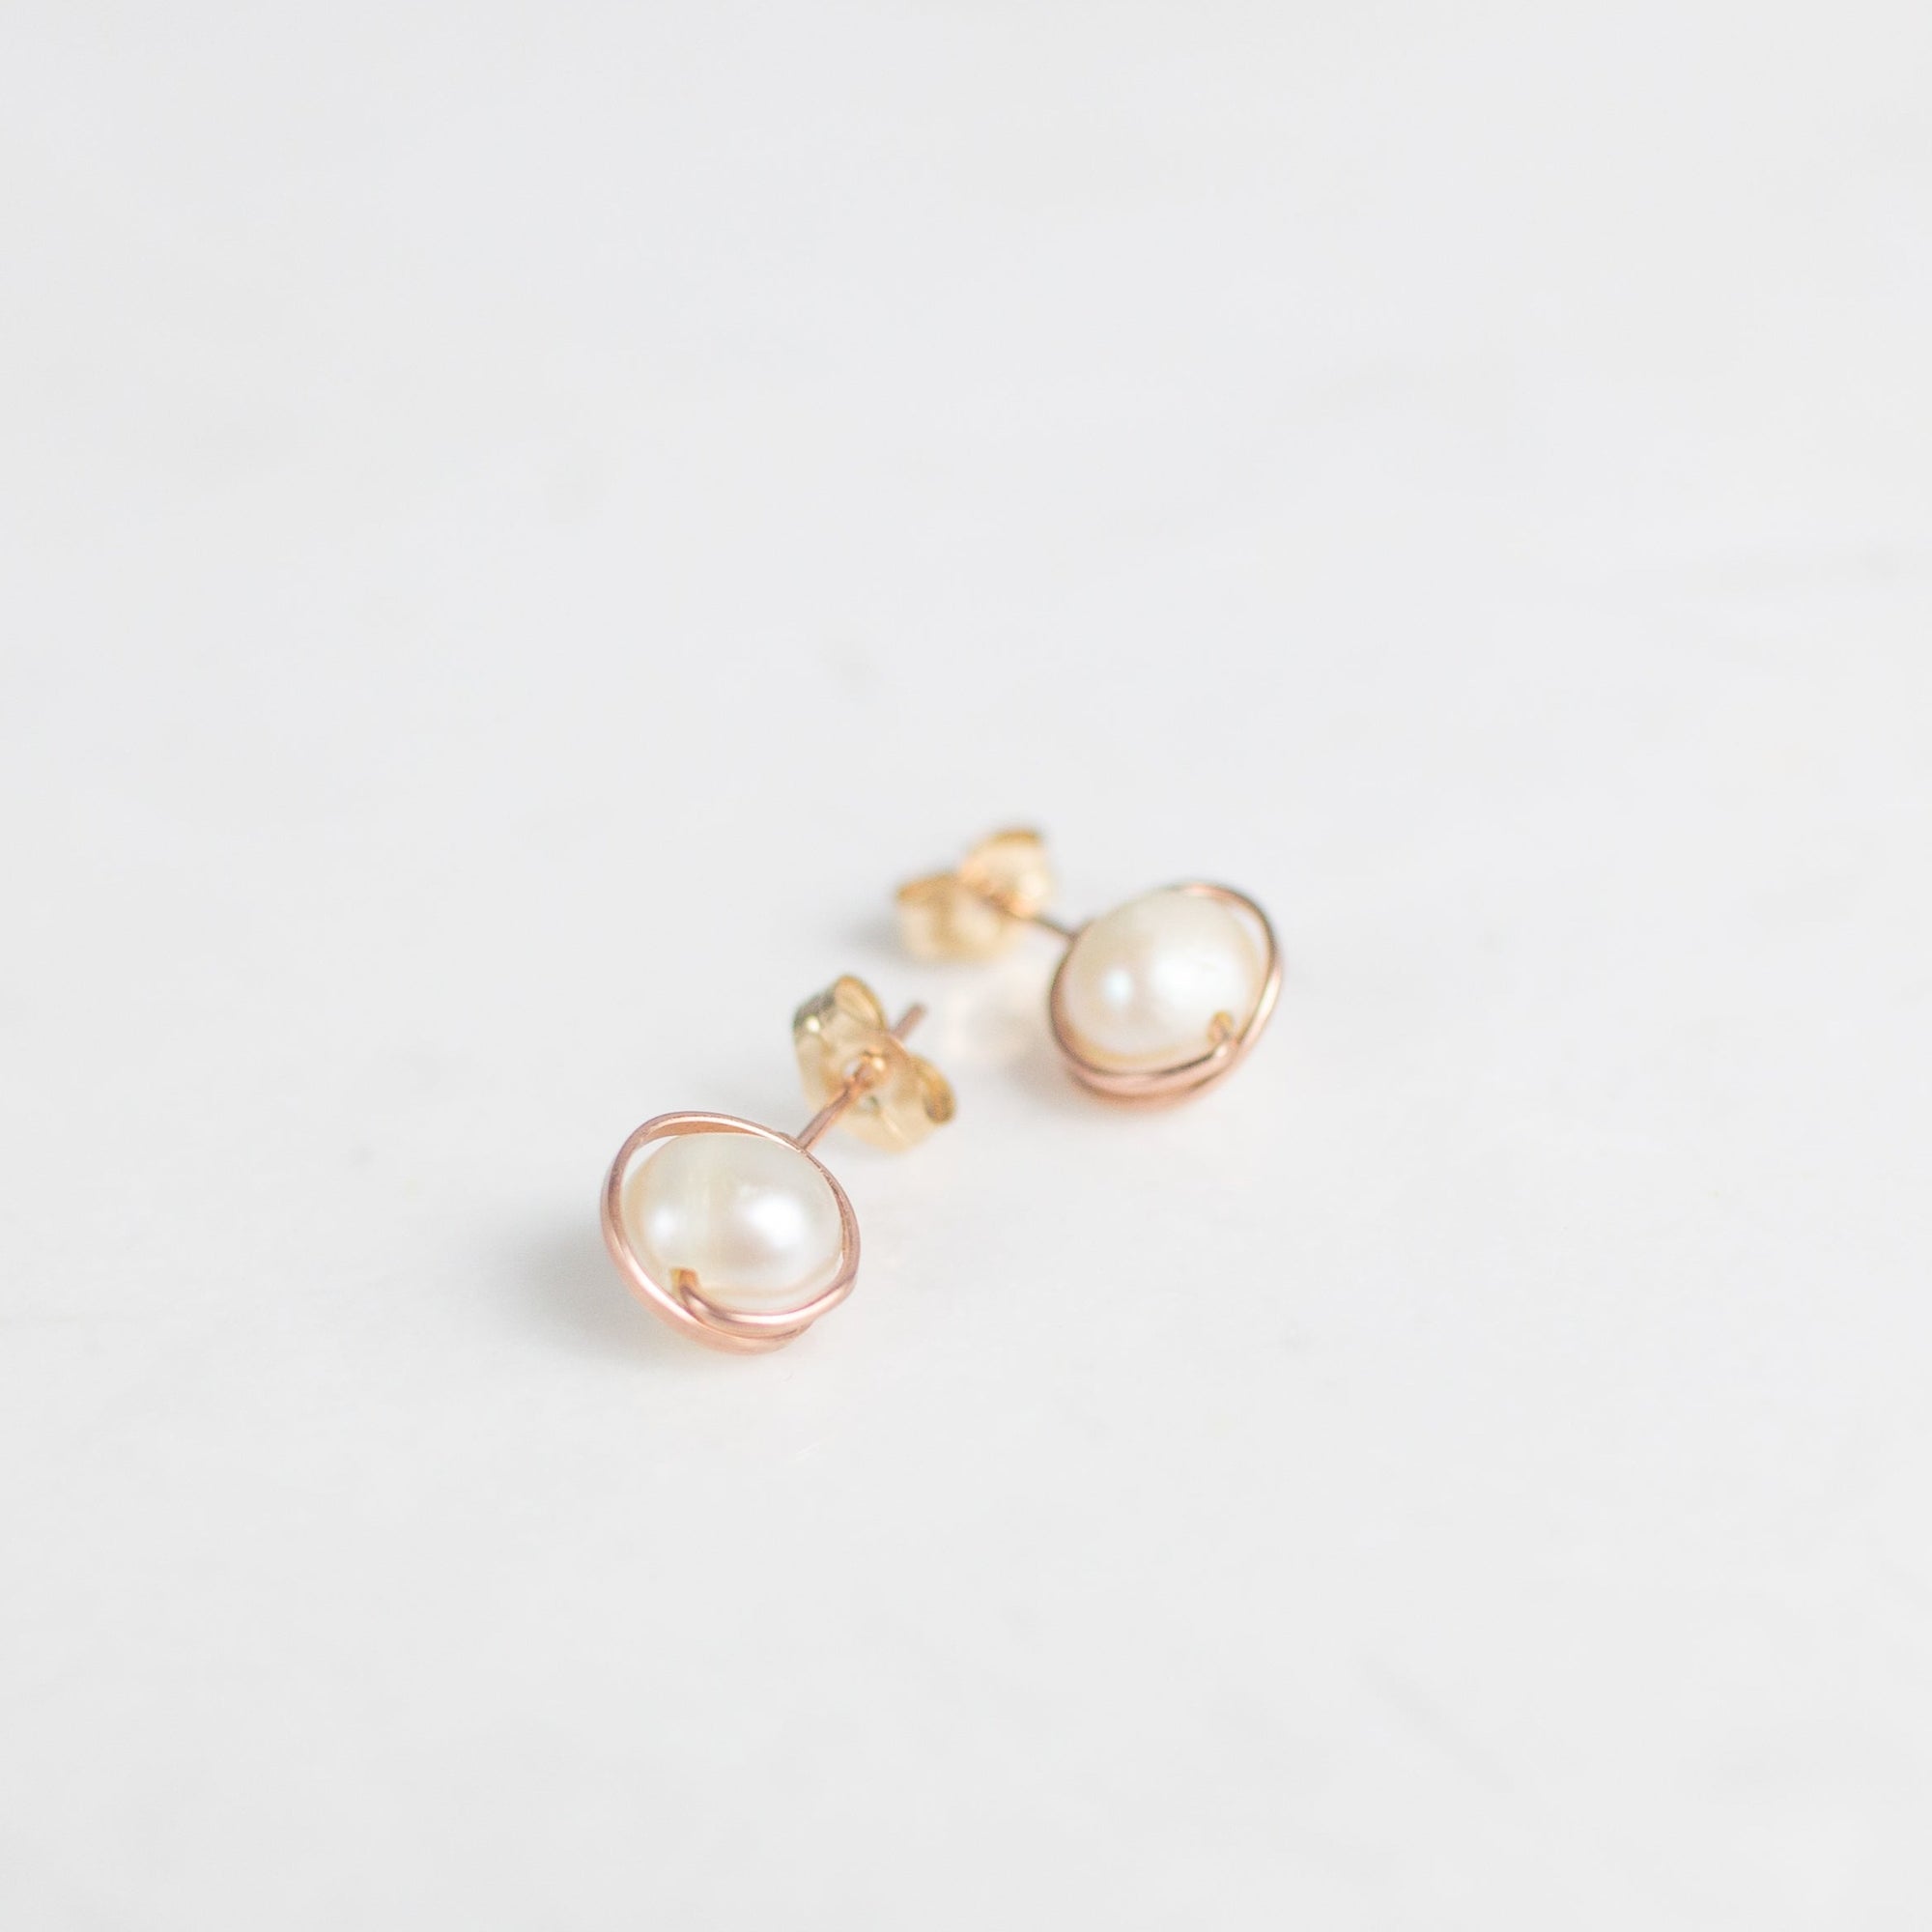 francois pearl stud earrings